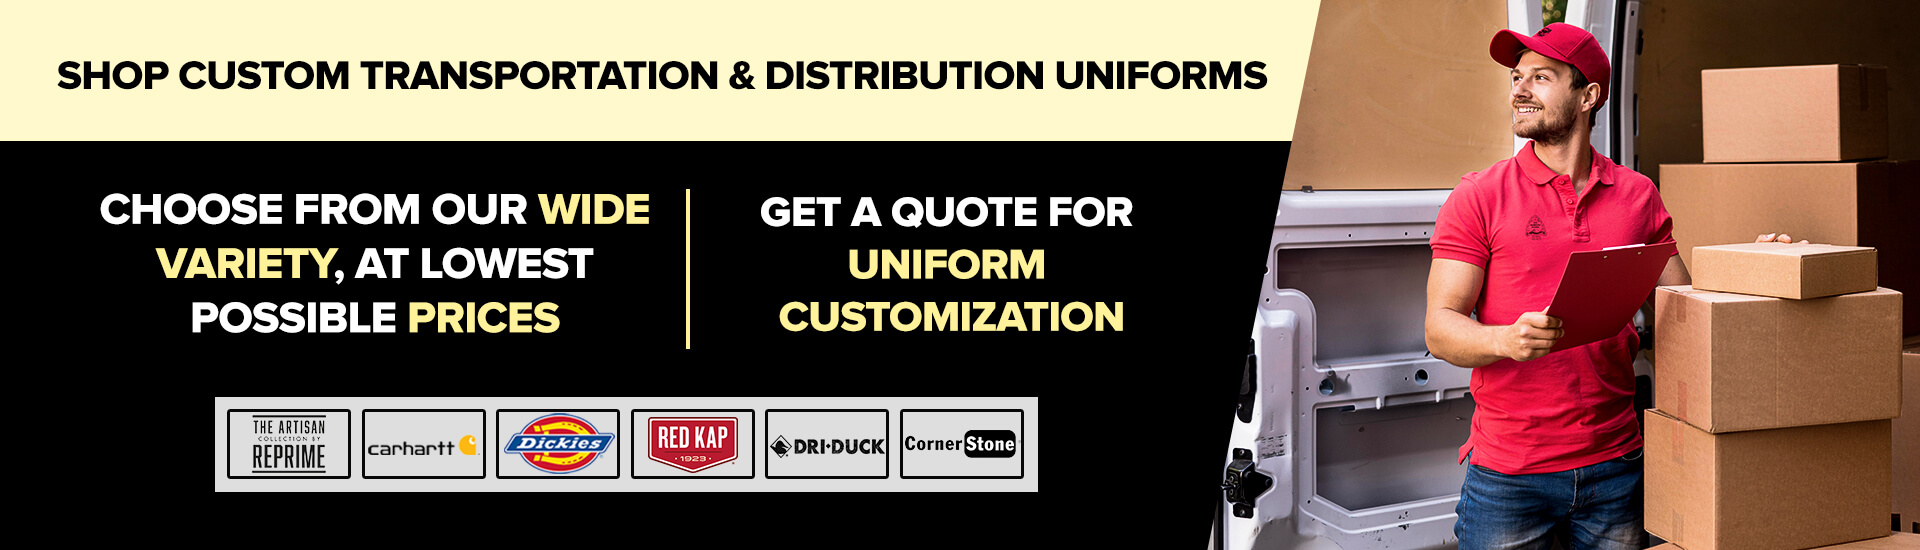 Shop Custom Transportation & Distribution Uniforms